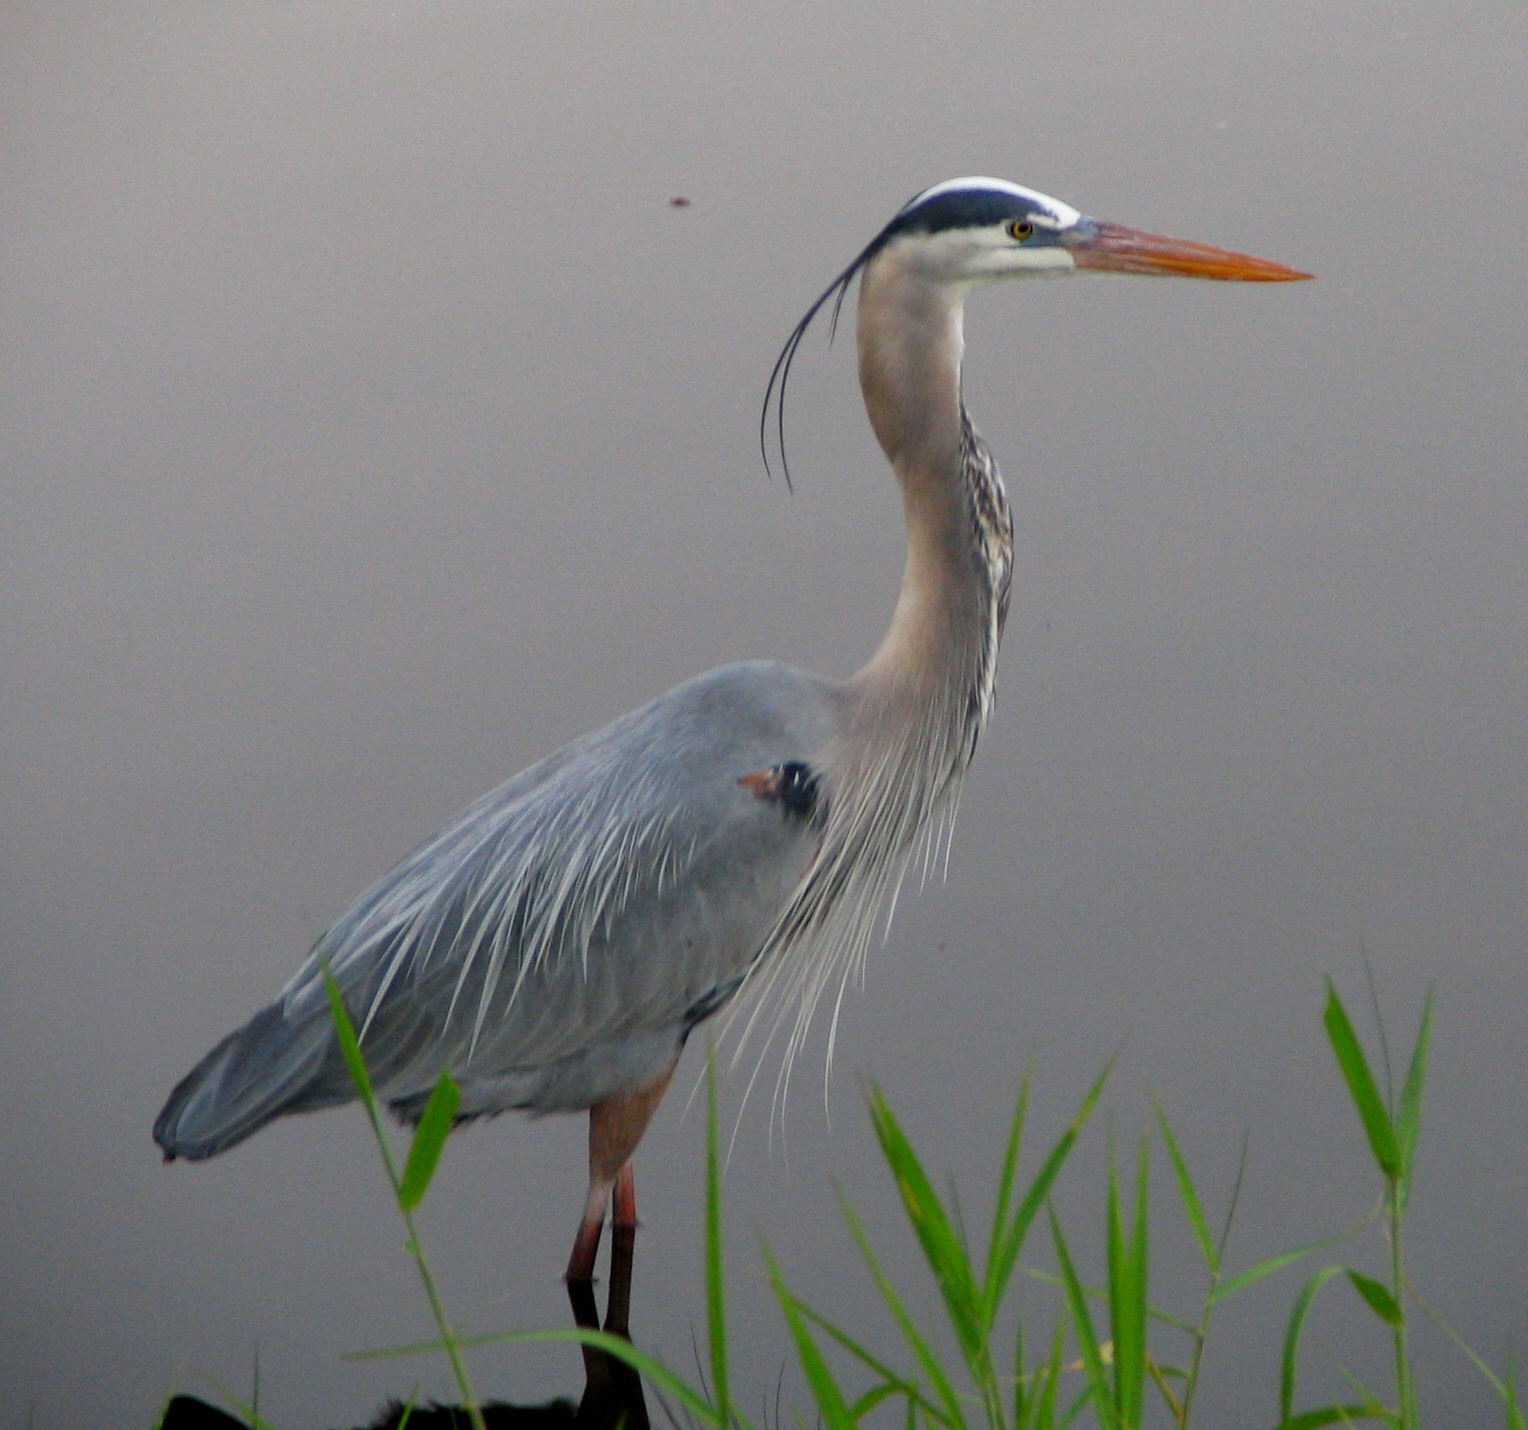 File:Myakka River - Great Blue Heron.jpg - Wikimedia Commons